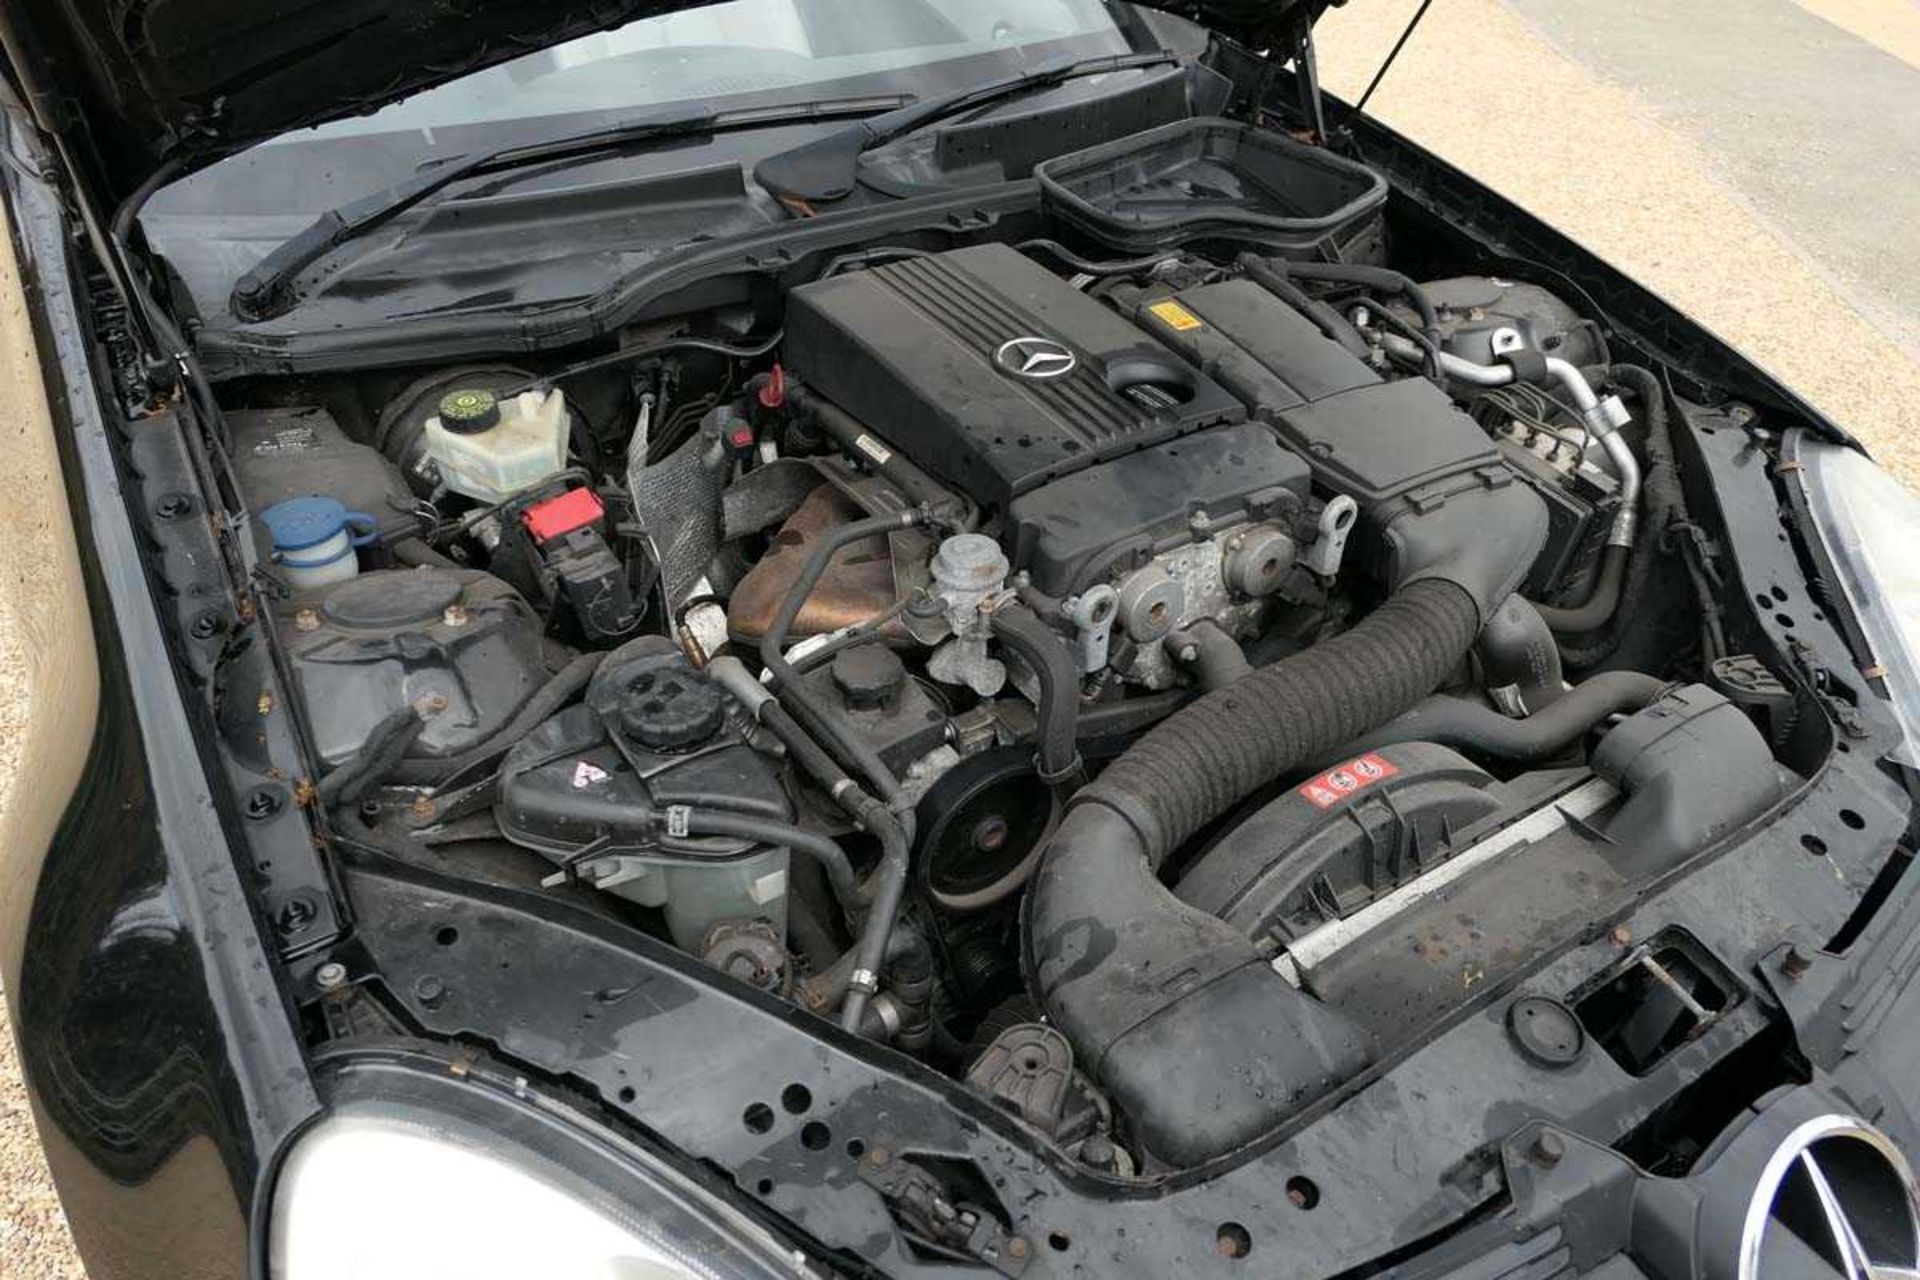 YP06 ECZ (2006) Mercedes 200 SLK Kompressor 1.8 litre automatic two door convertible in black, - Image 7 of 12